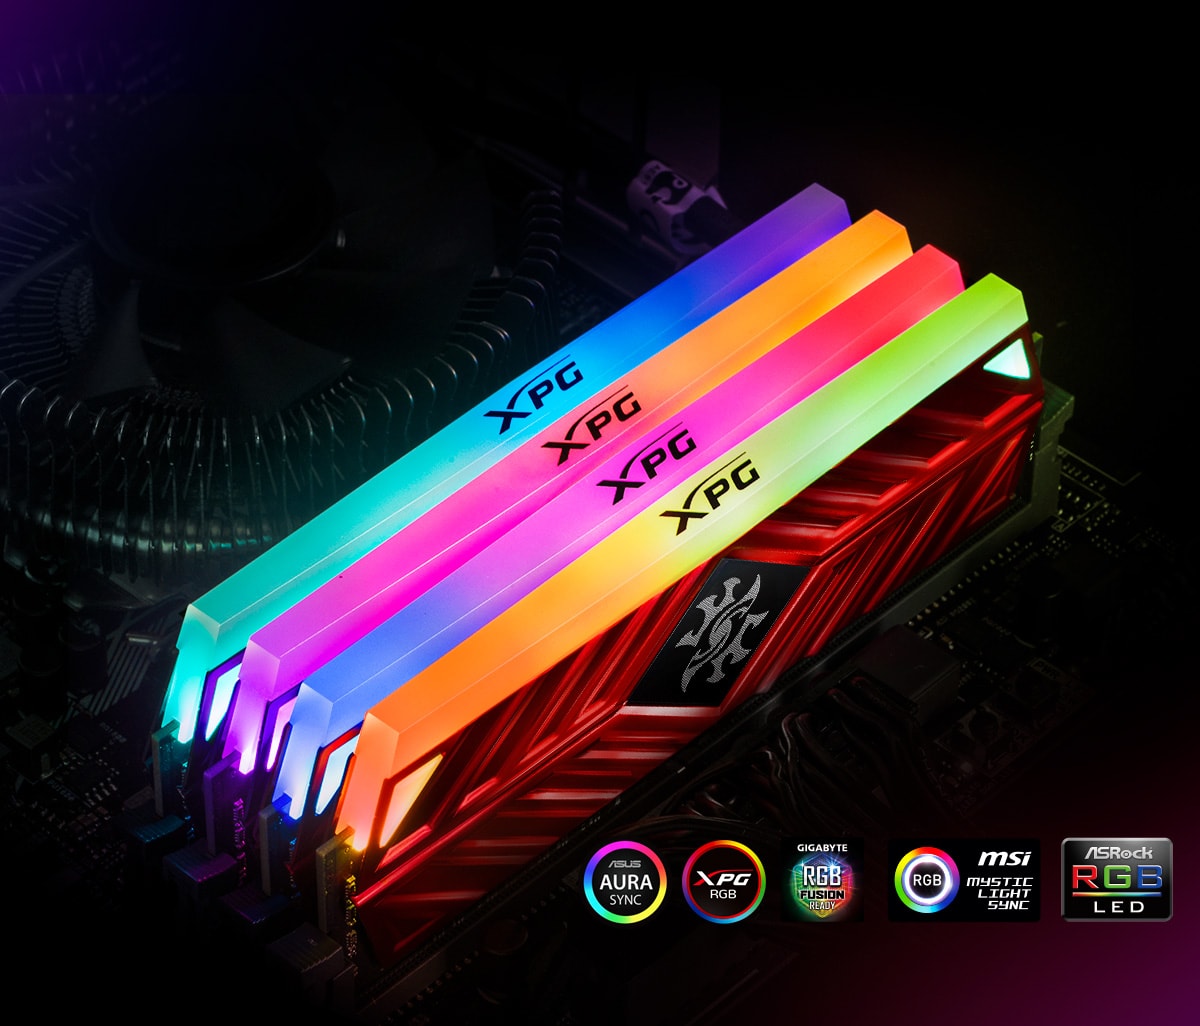 Adata XPG Spectrix 16GB DDR4 3200Mhz RAM